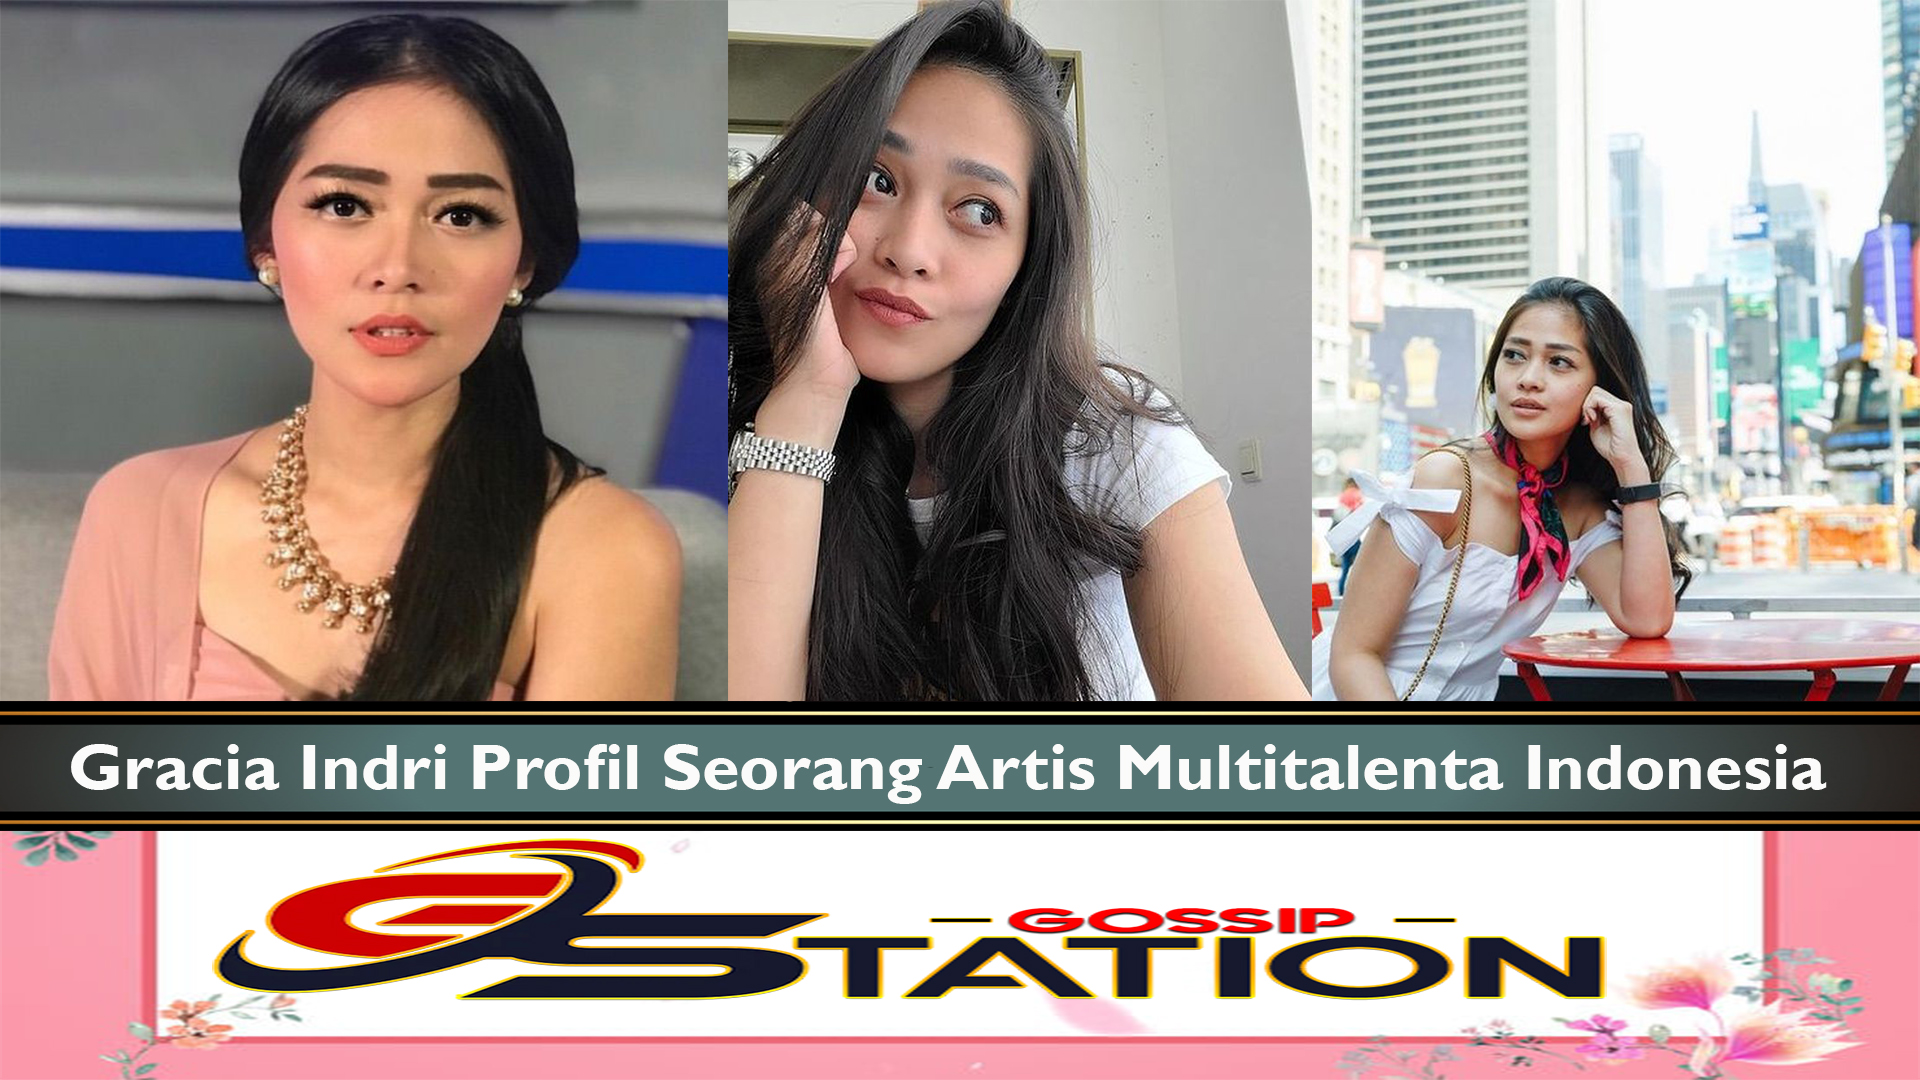 Gracia Indri Profil Seorang Artis Multitalenta Indonesia